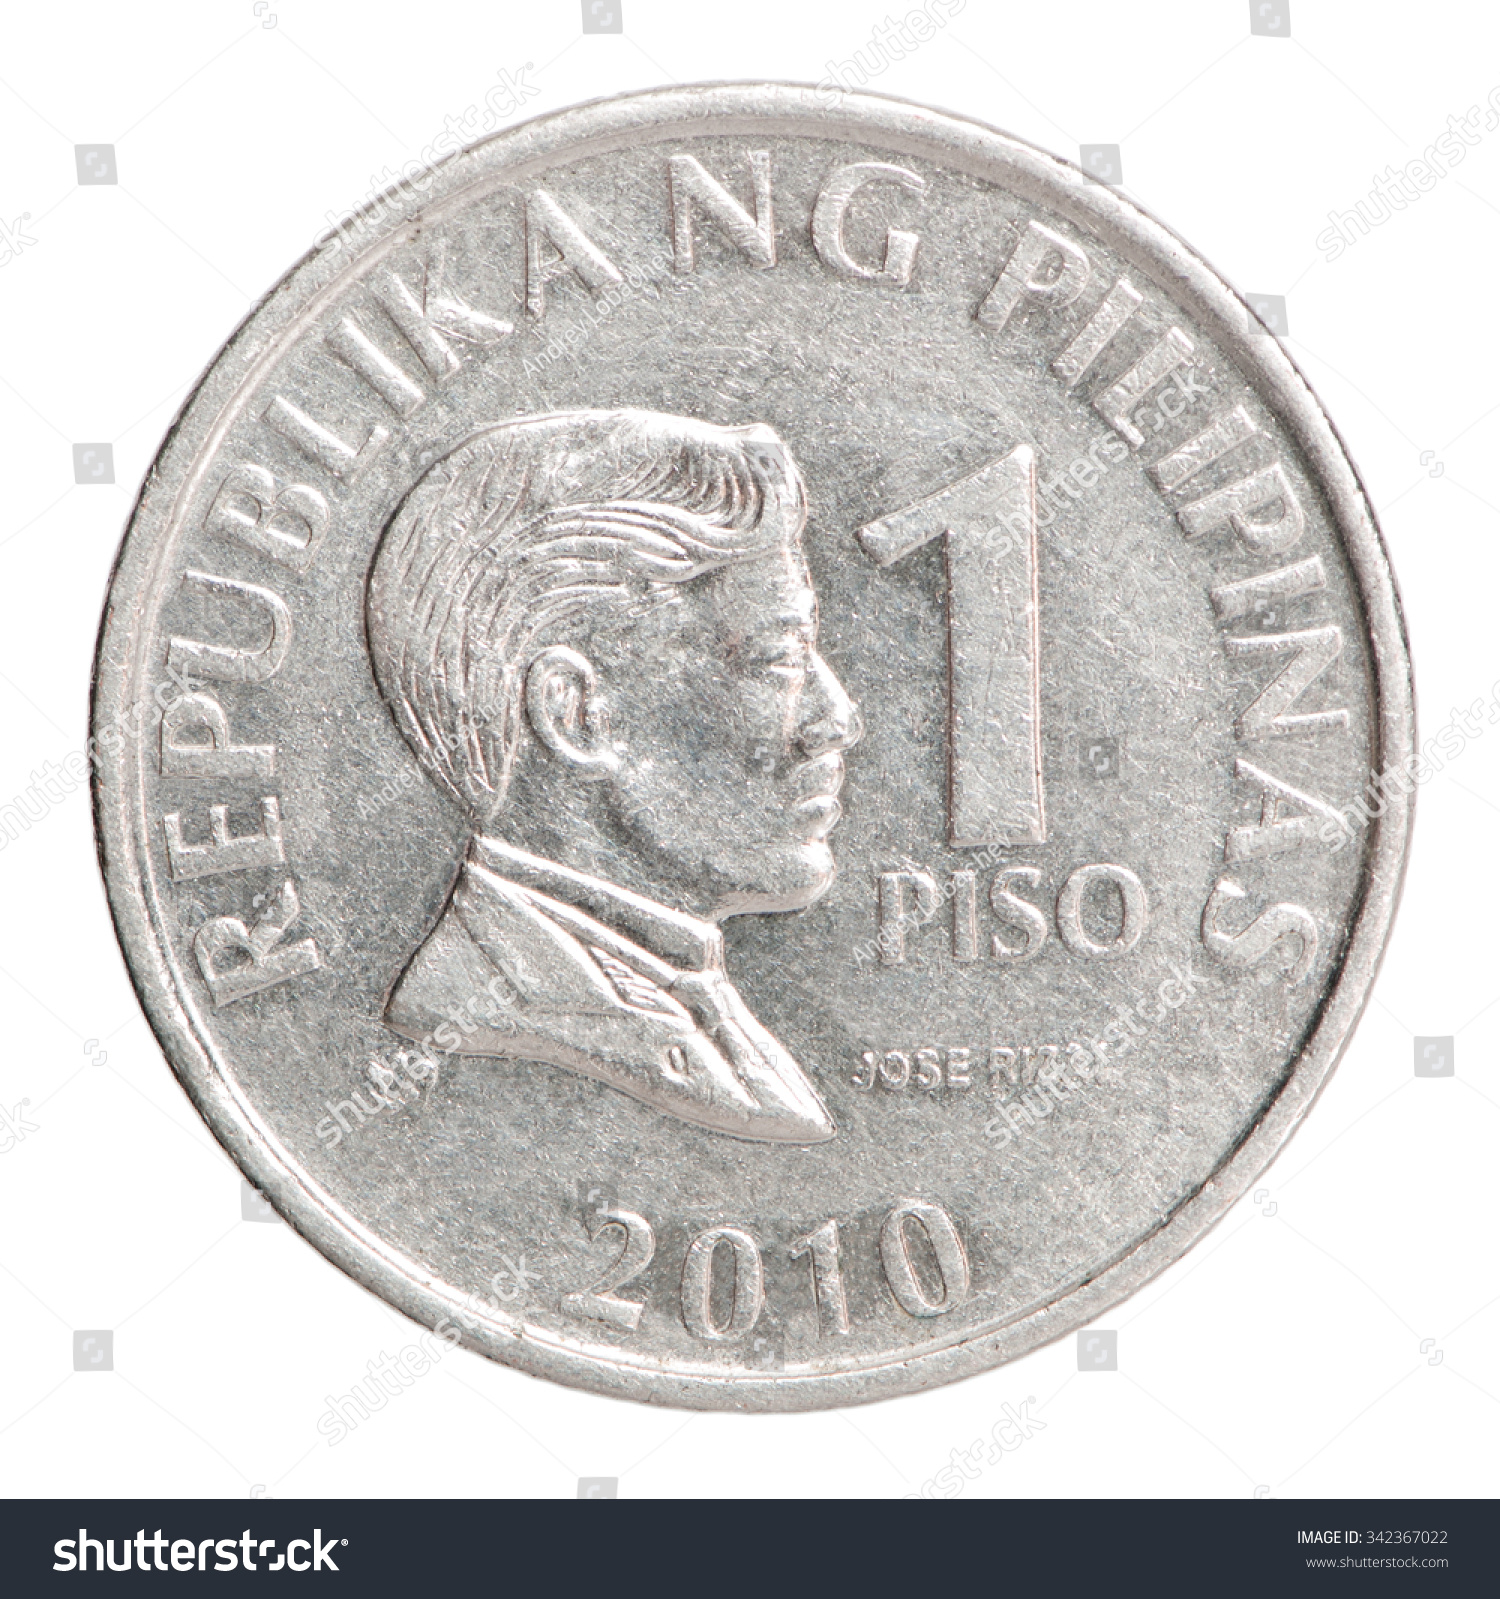 clipart philippine money - photo #4